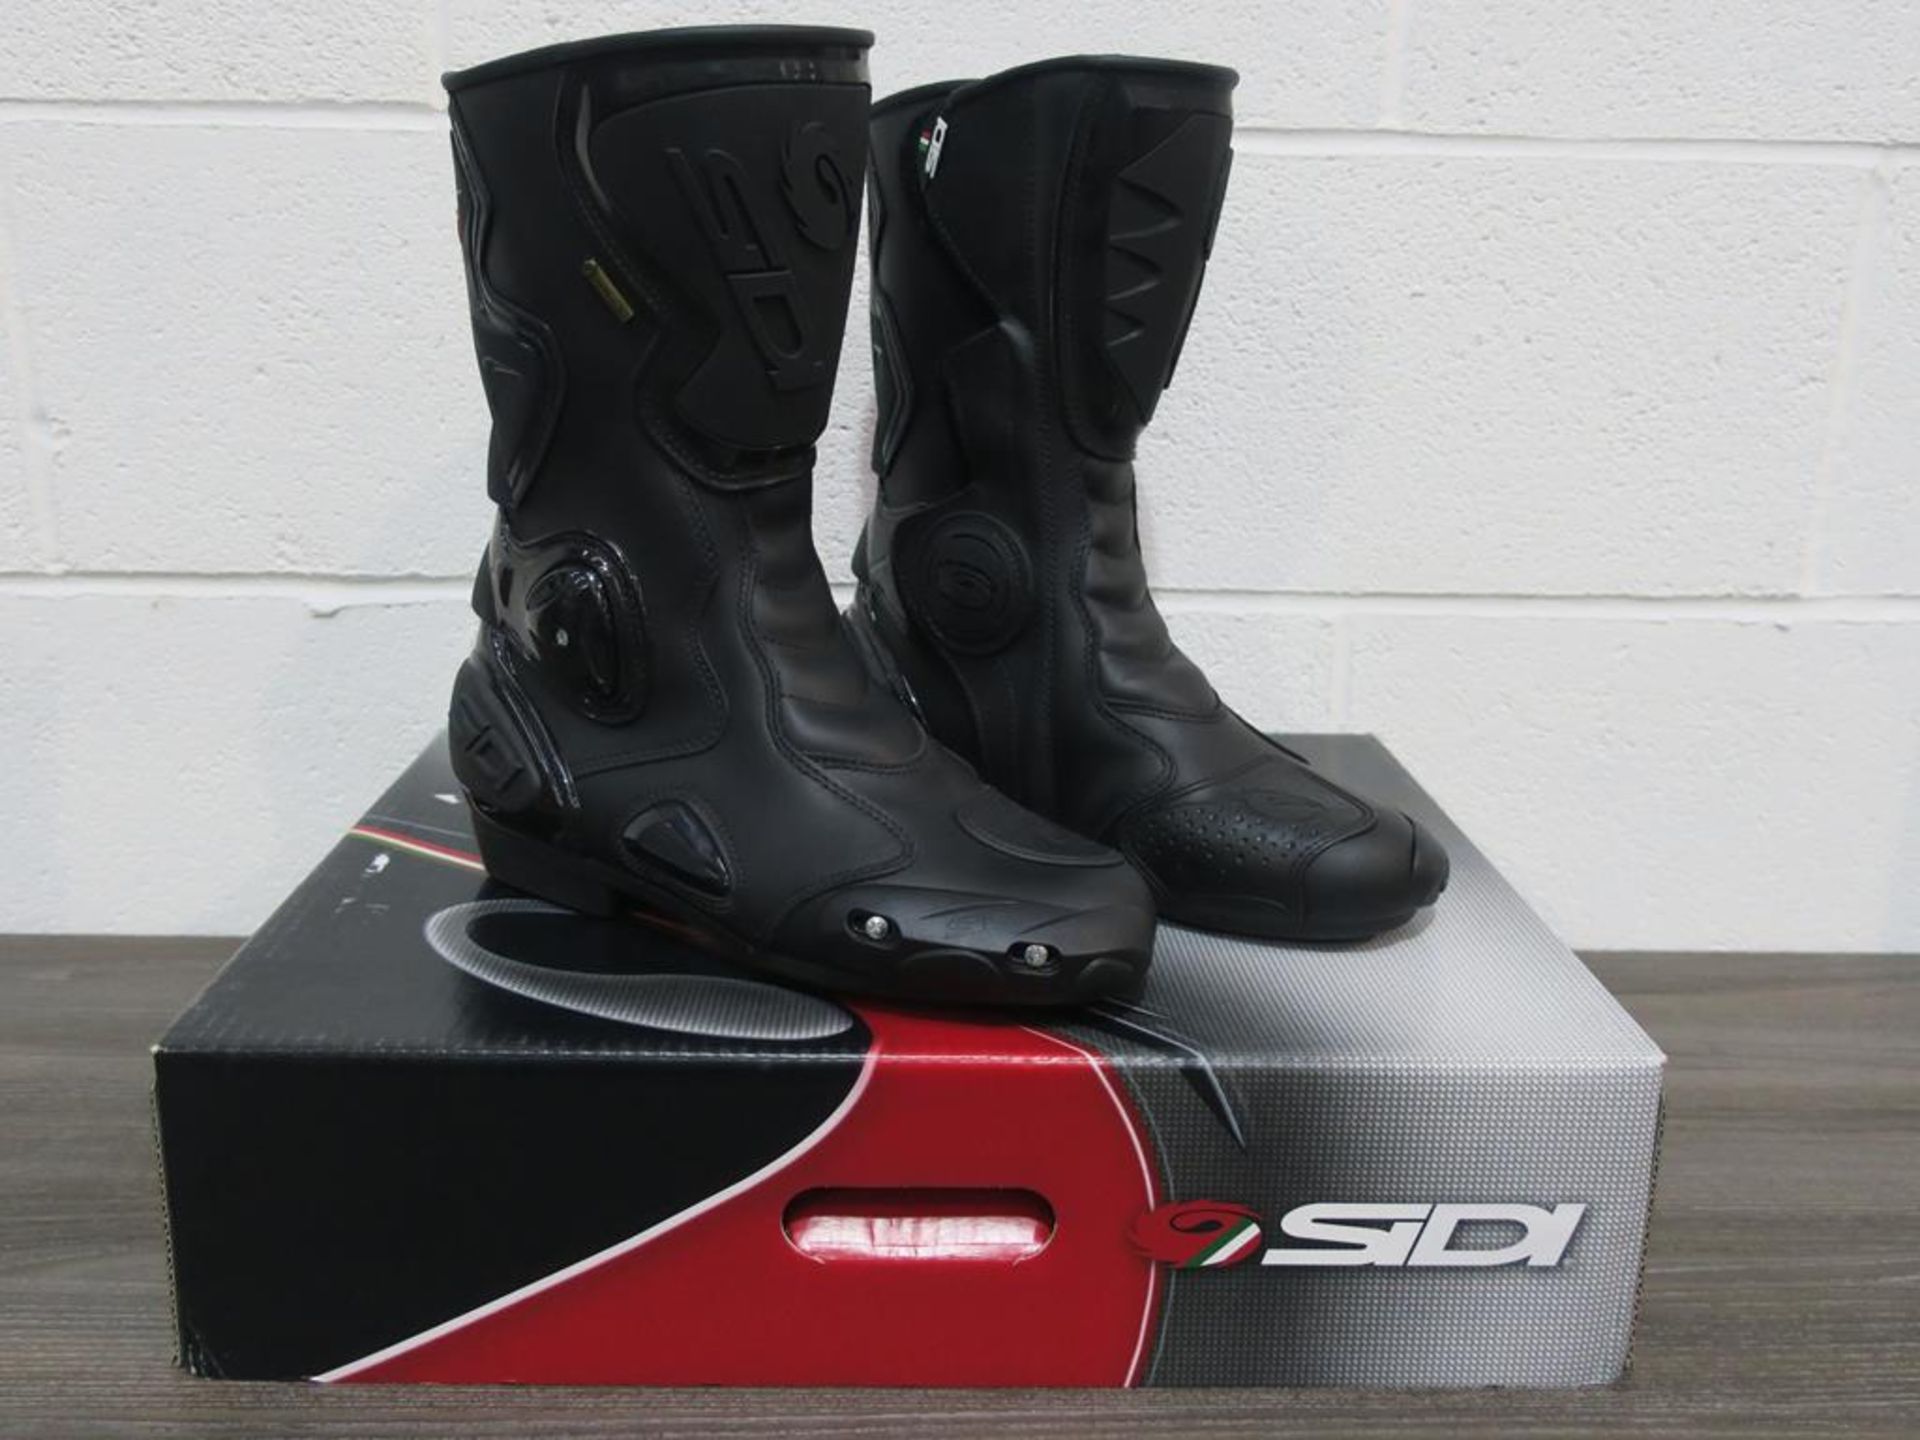 * Sidi Stivali B2 Gore Black Boots Euro Size 44 (RRP £274)